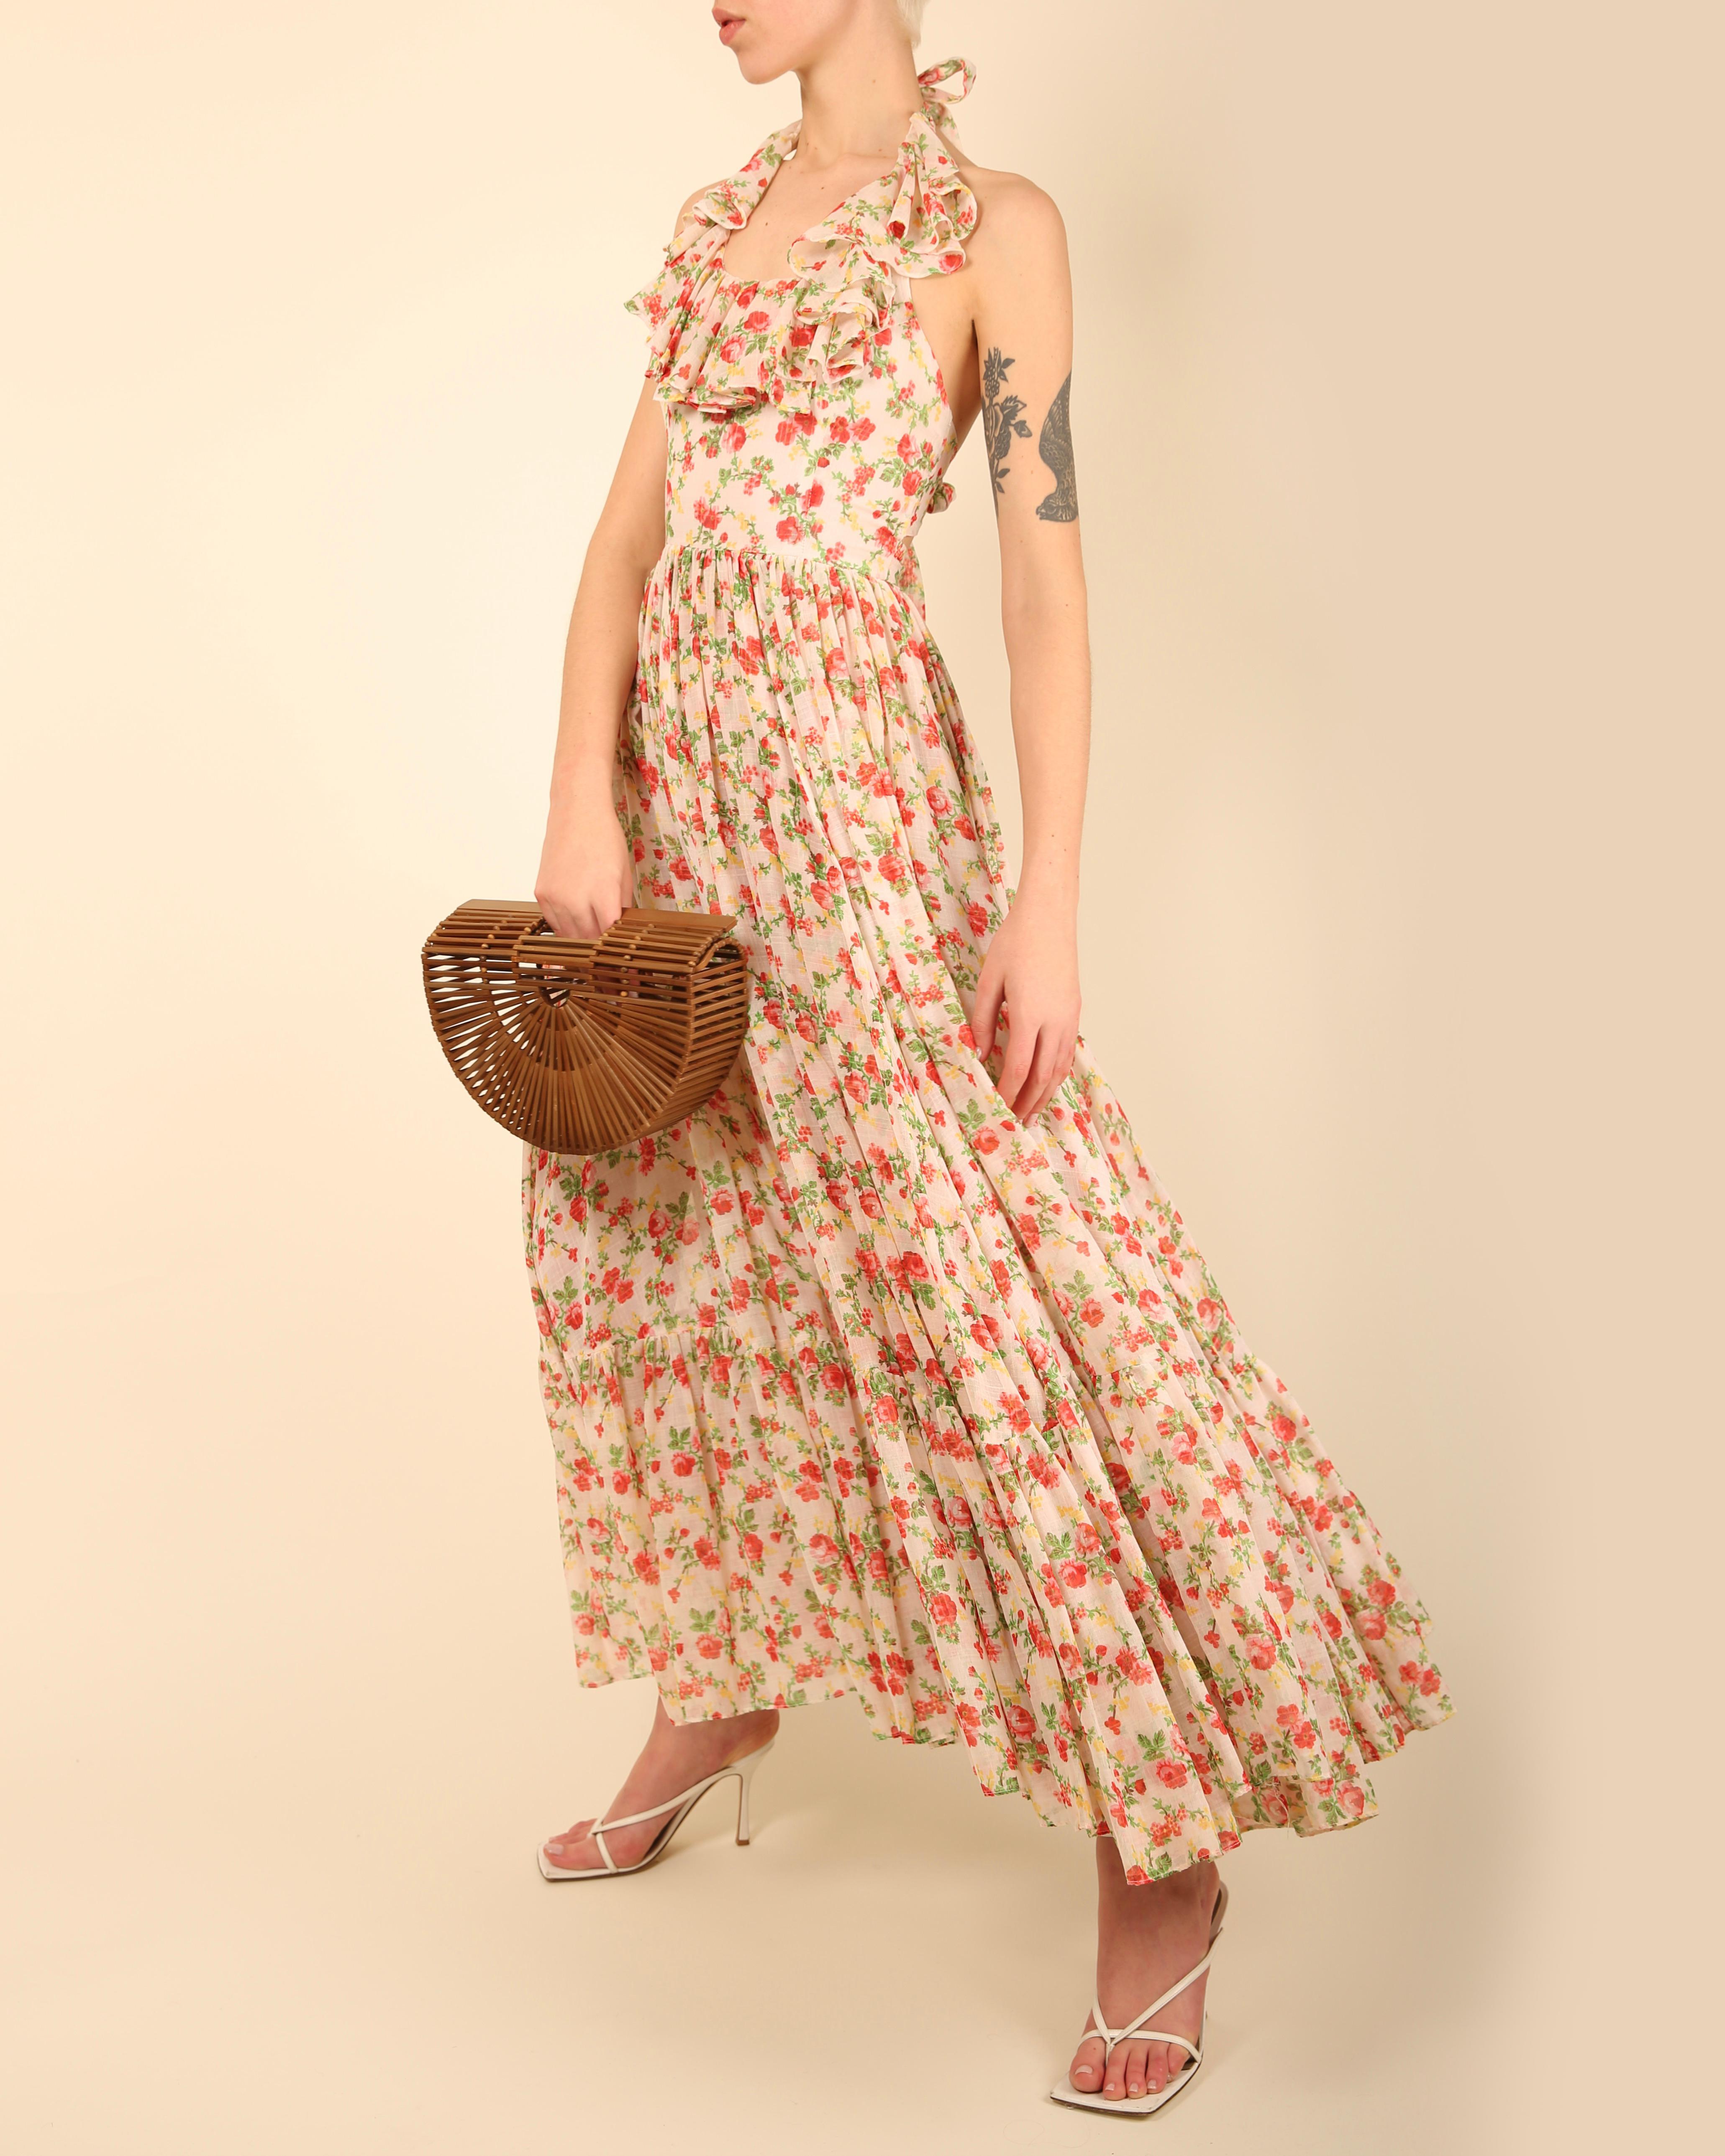 Vintage cottagecore prairie cotton white red floral print halter backless dress For Sale 10